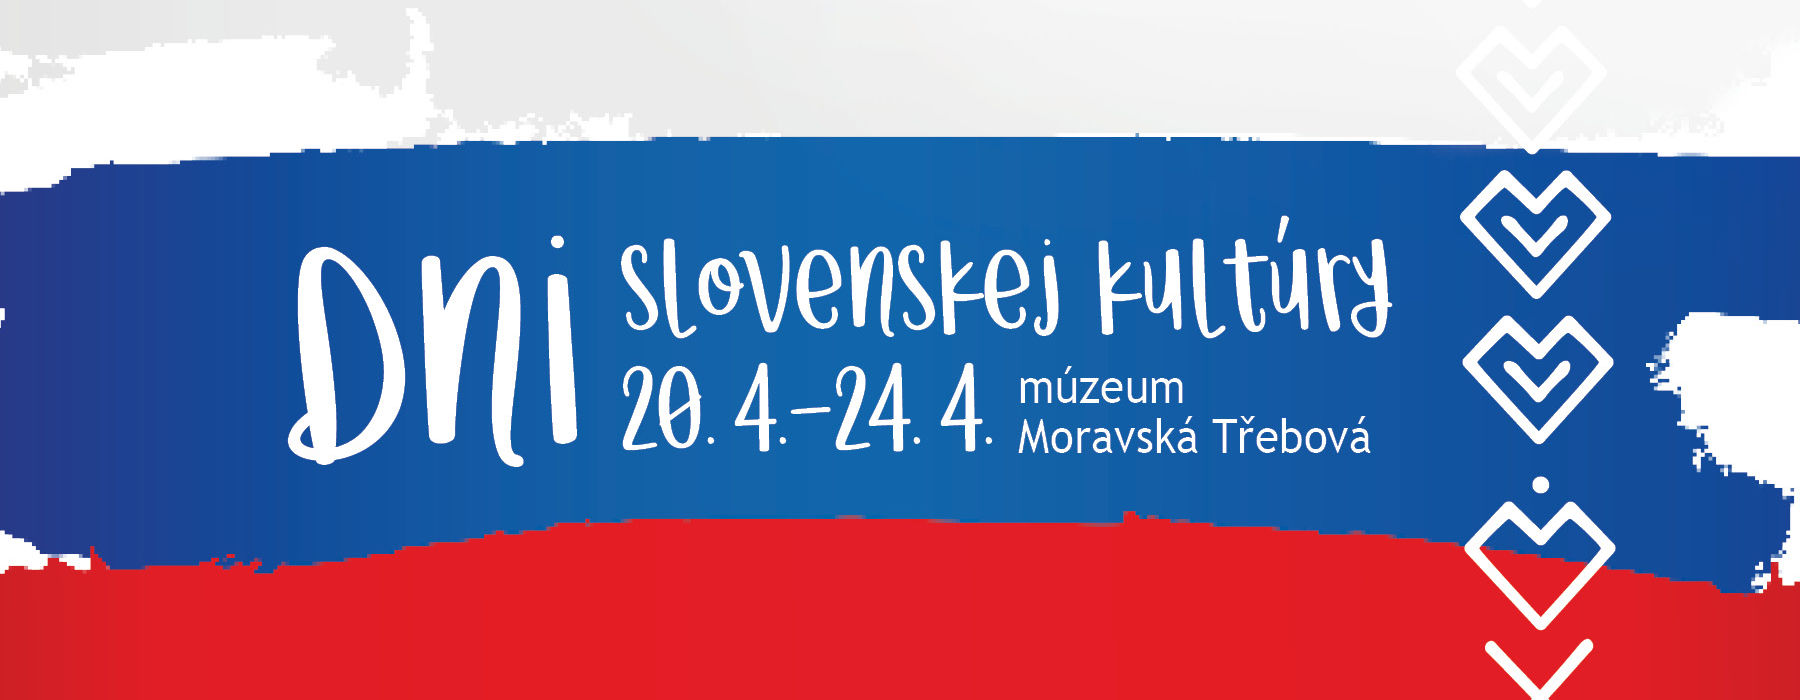 Dni slovenskej kultúry